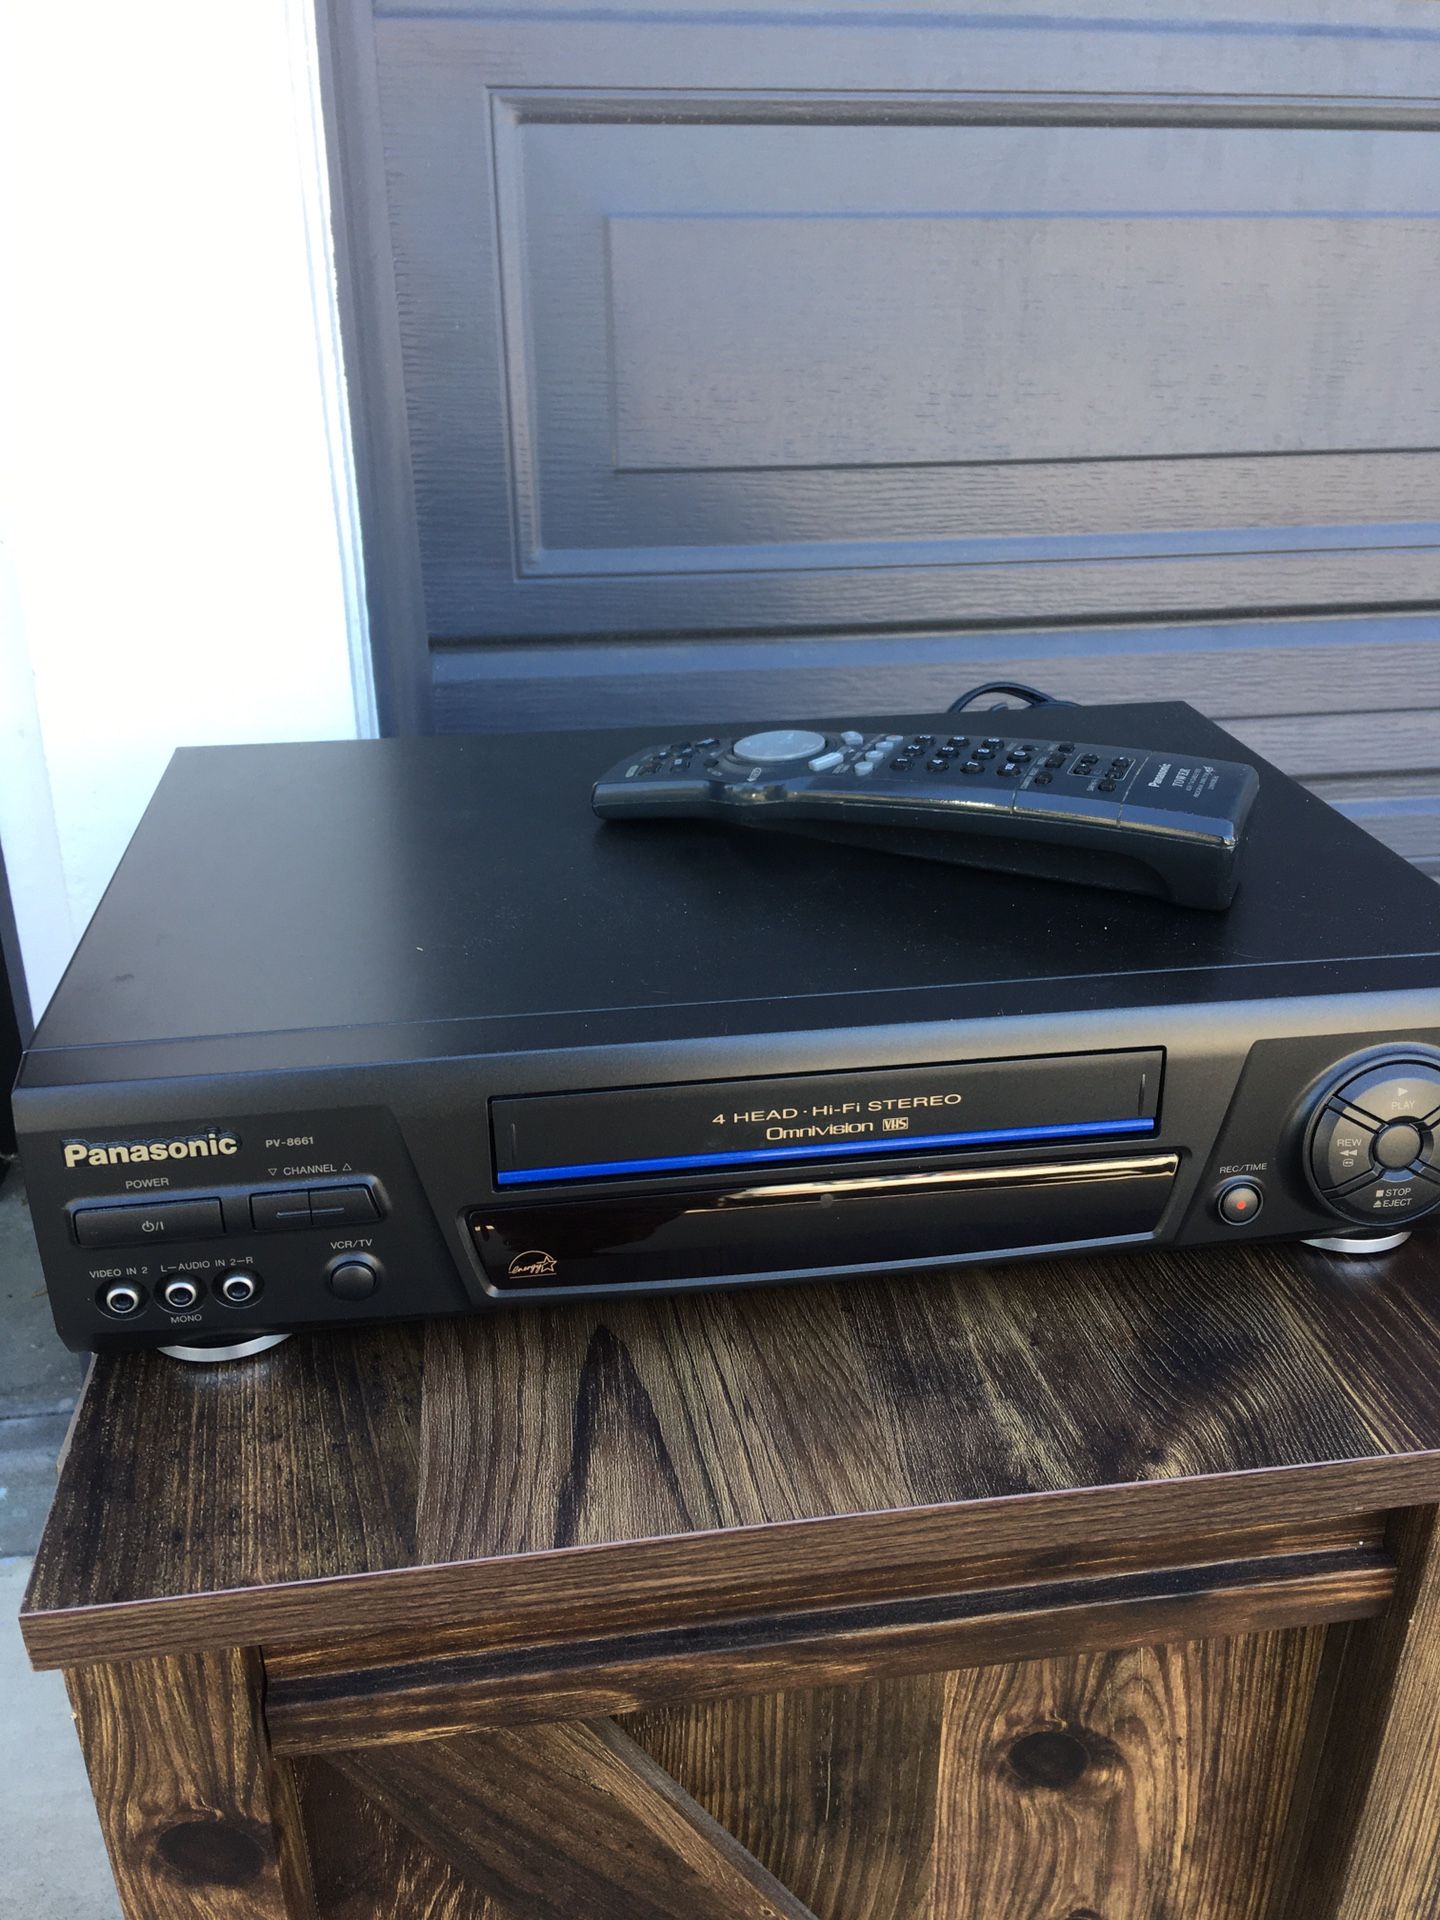 Panasonic VHS Recorded/player